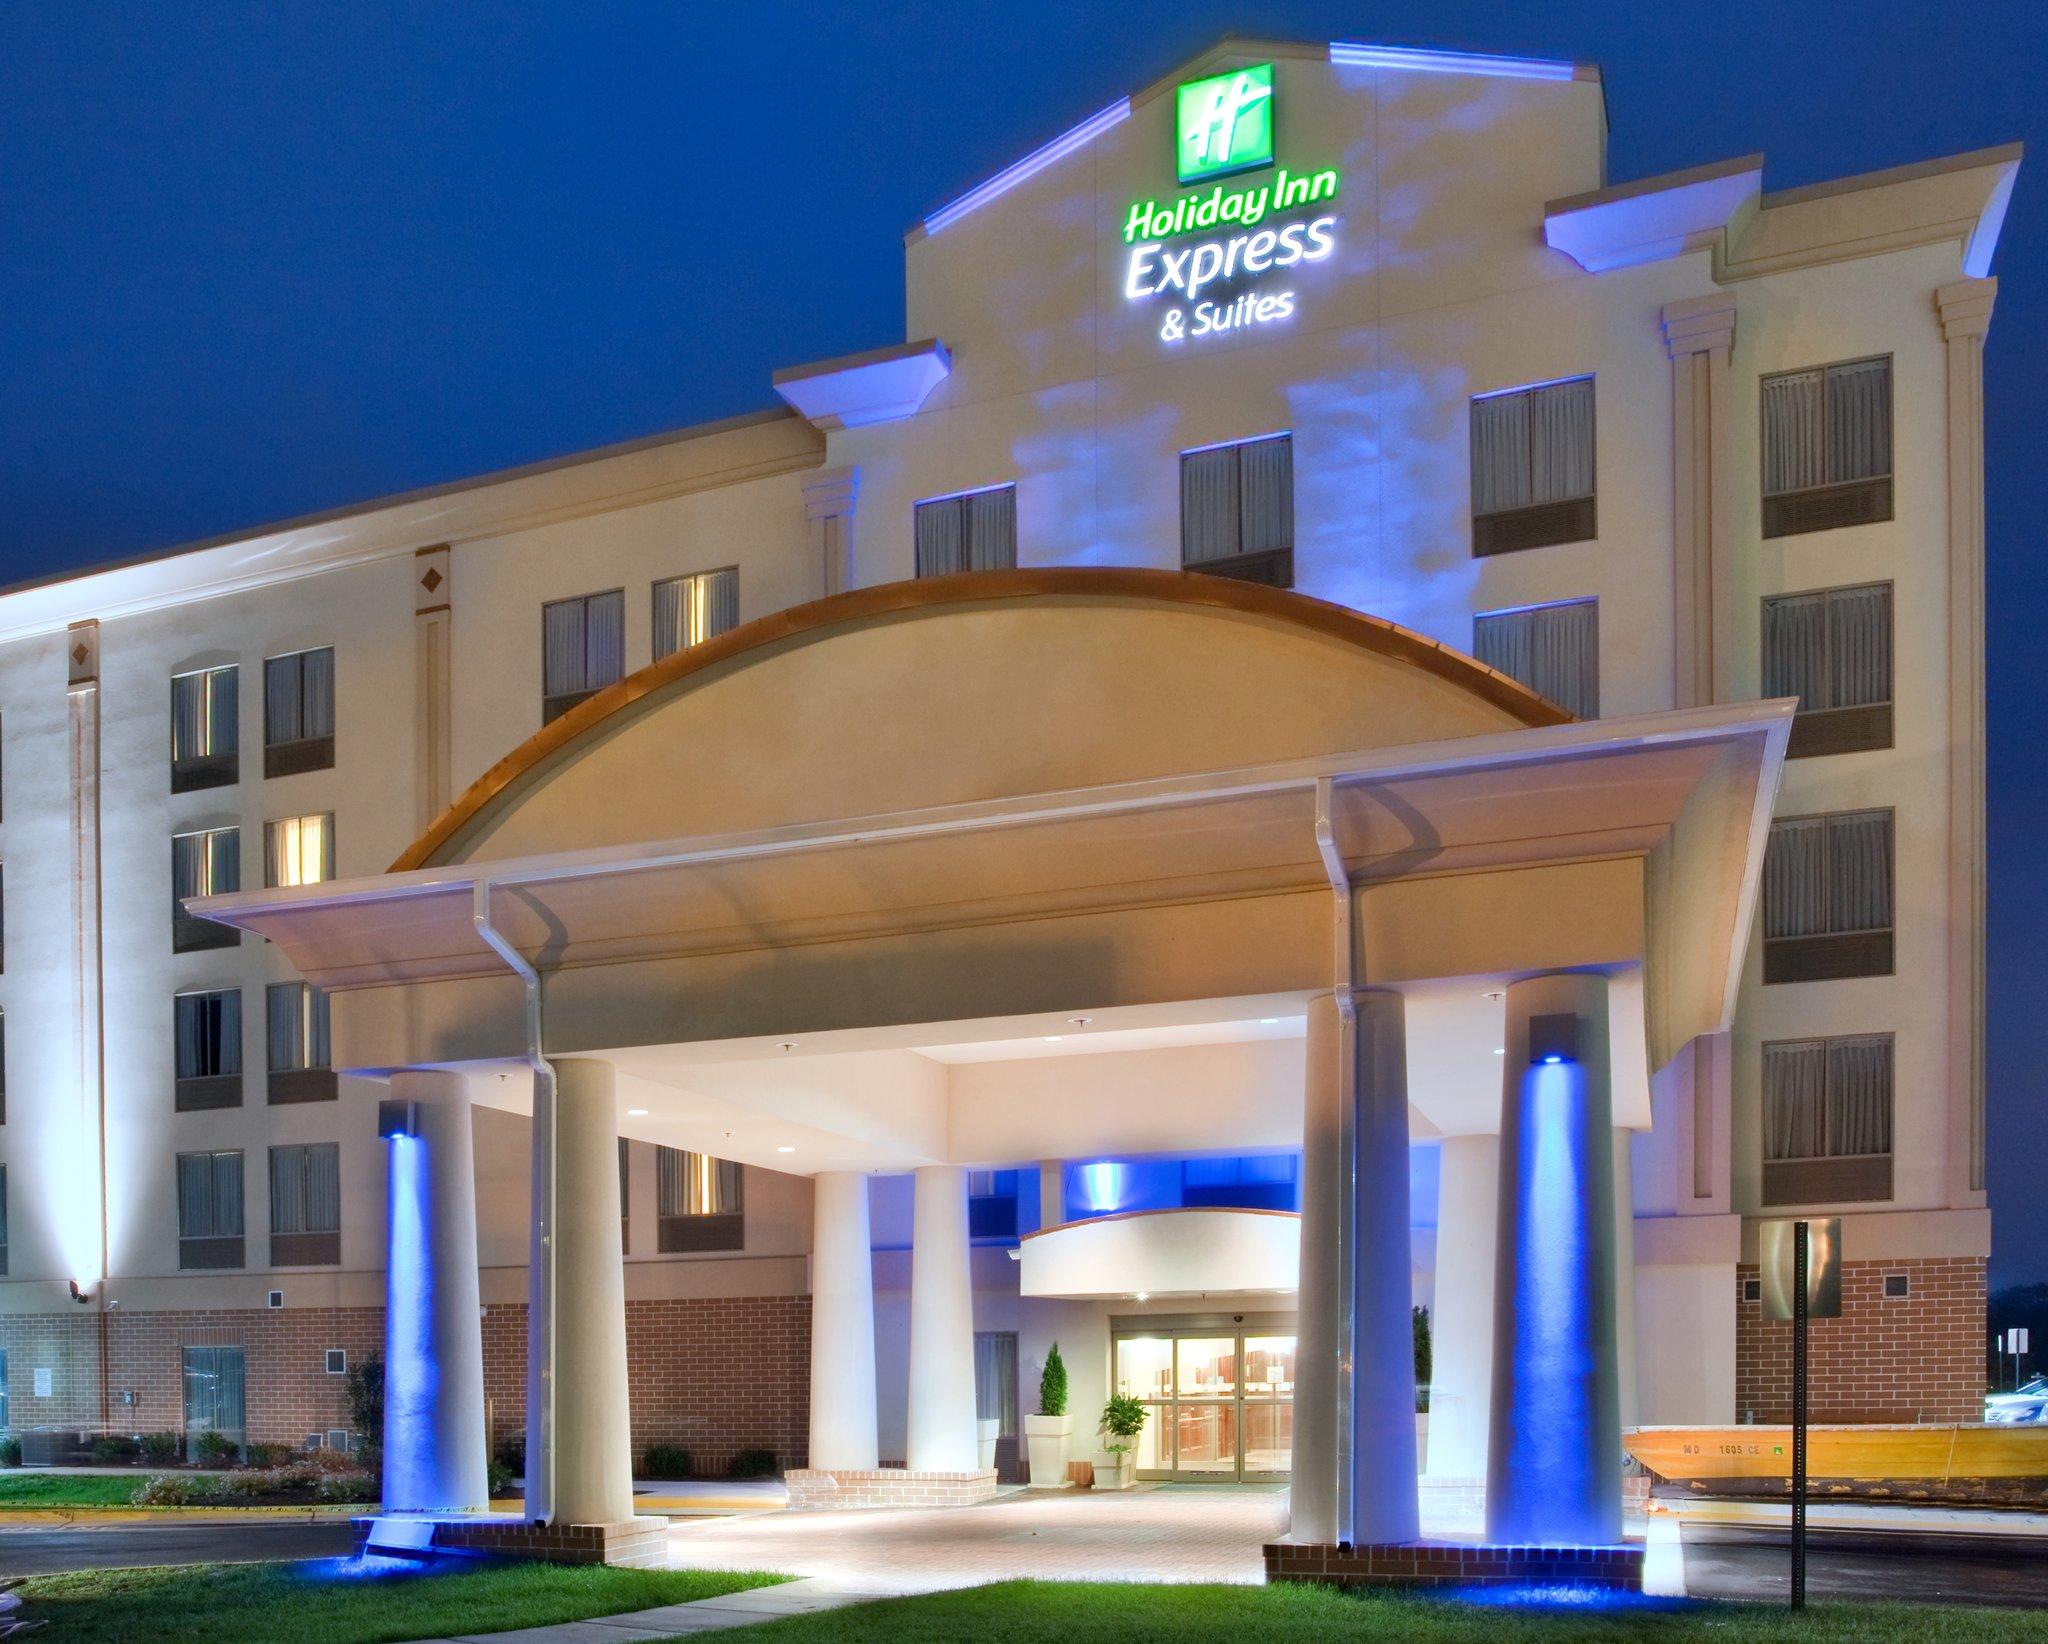 Holiday Inn Express & Suites Fredericksburg in Fredericksburg, VA